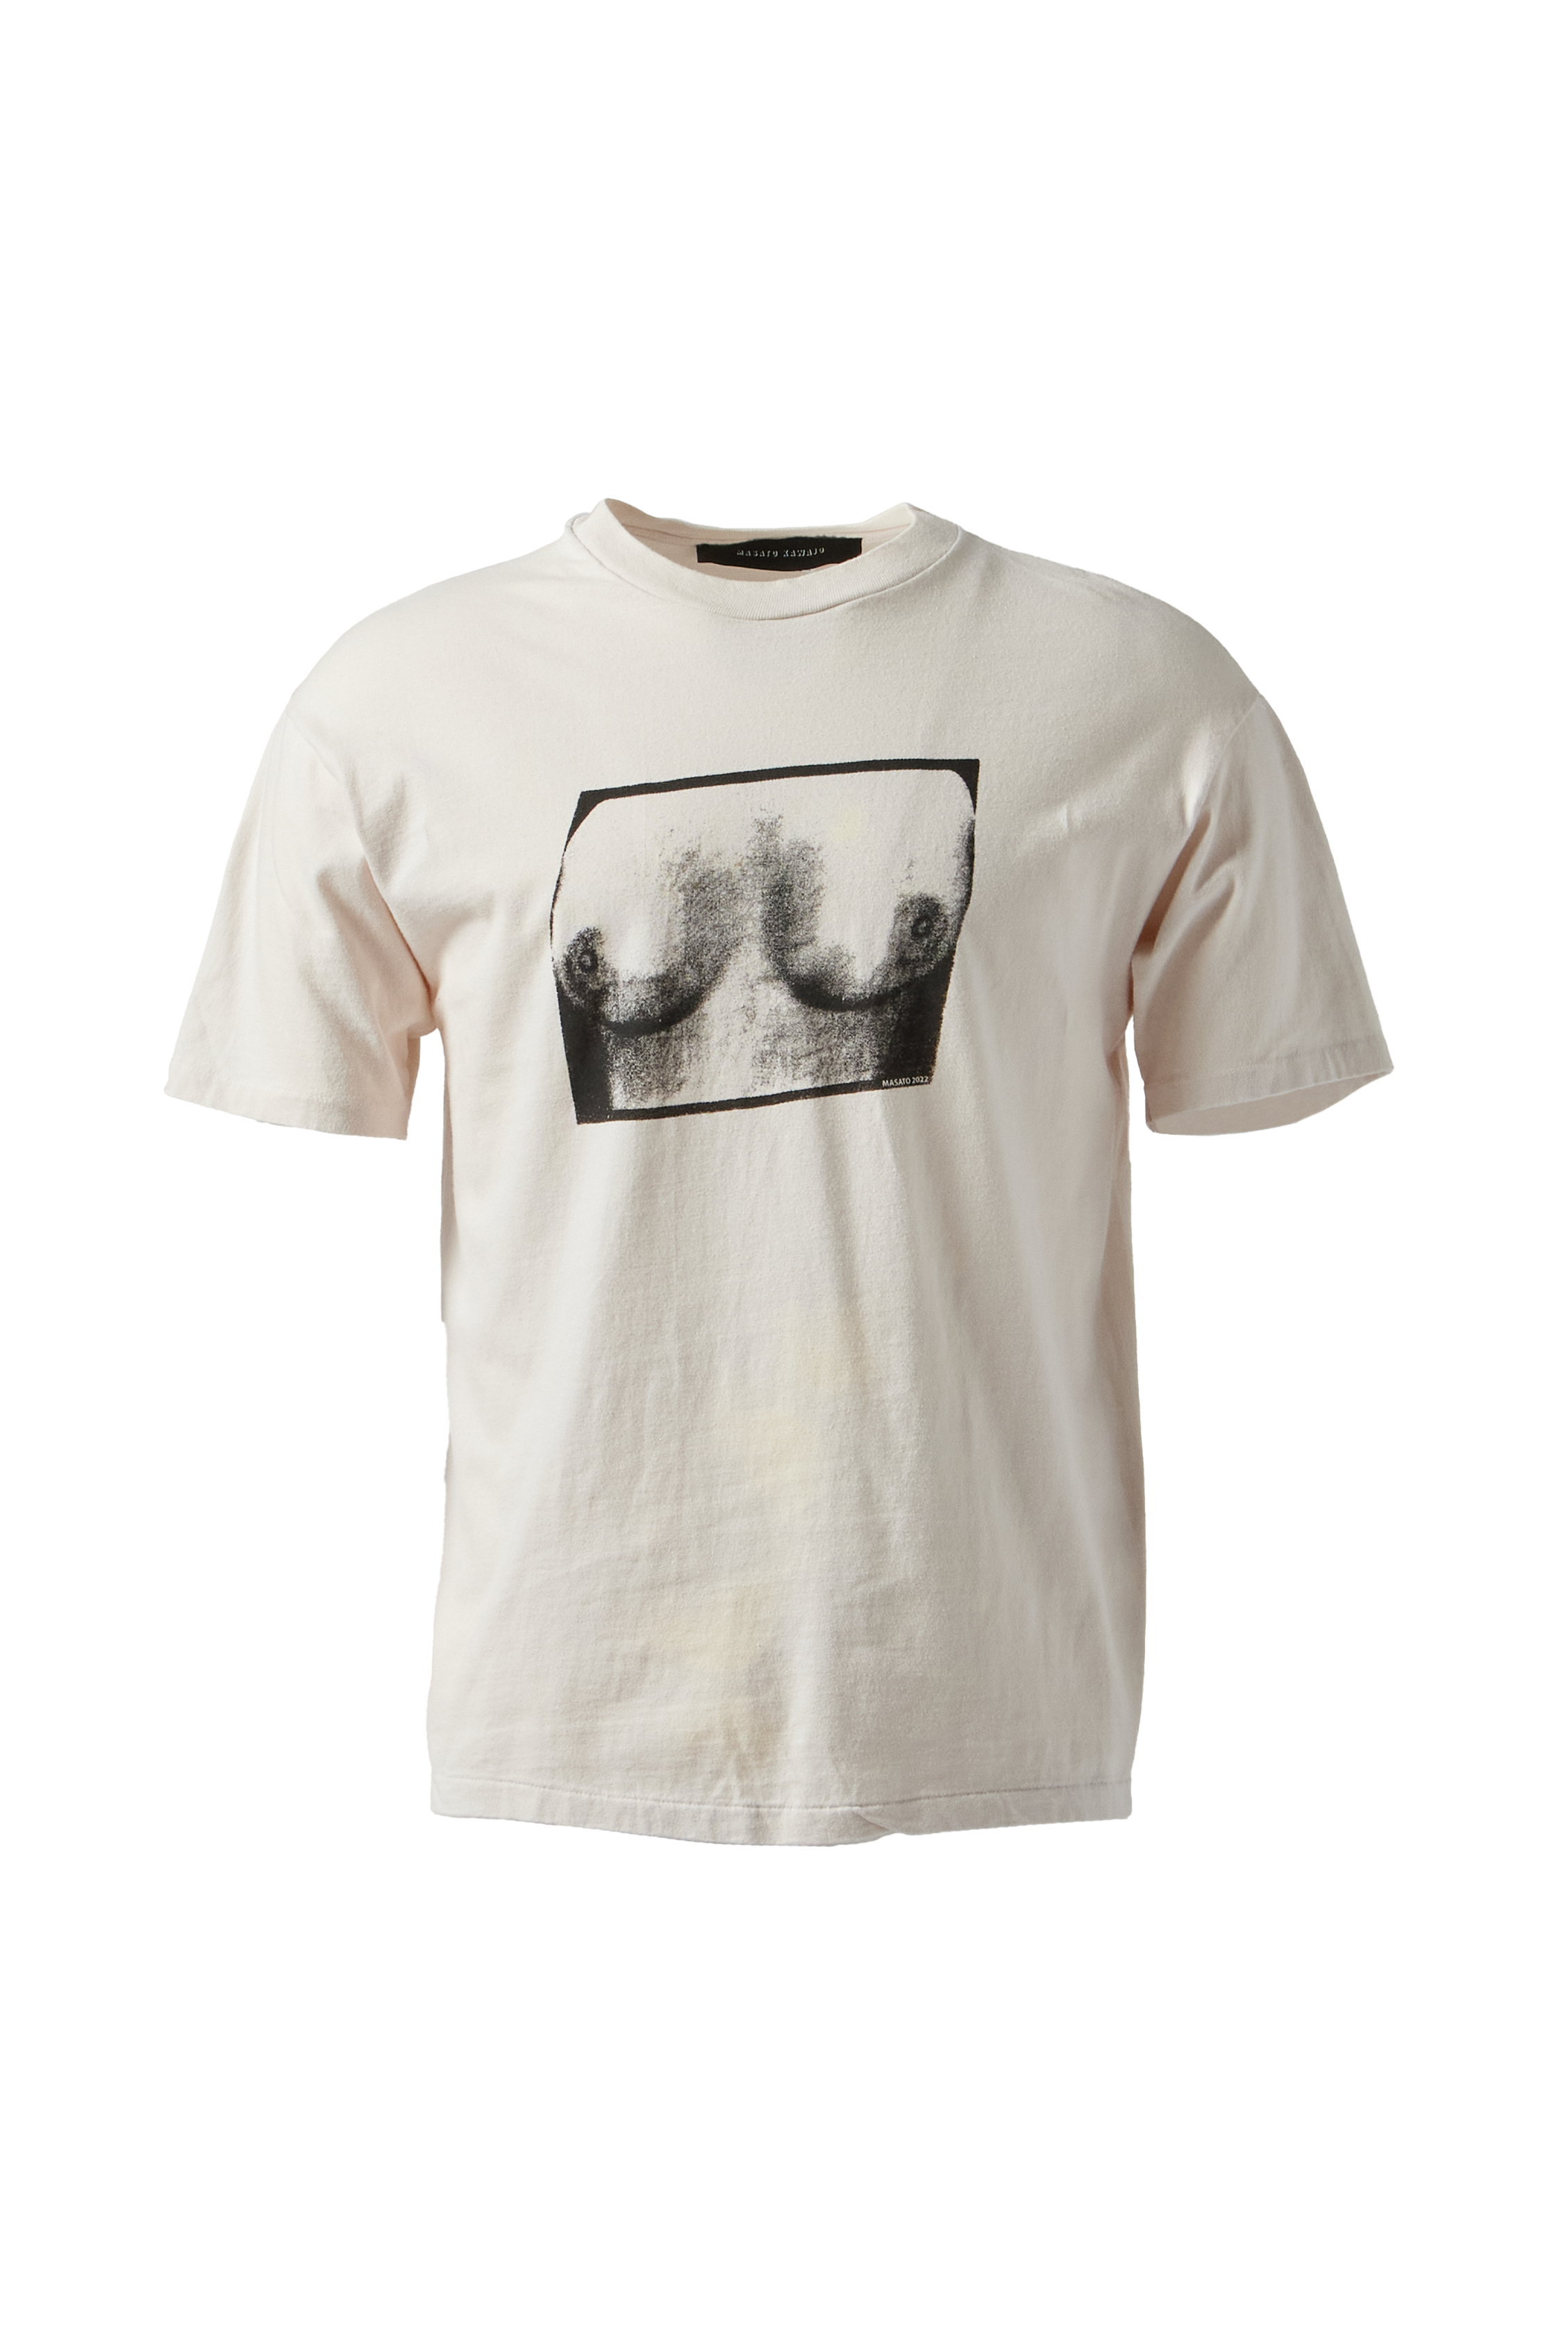 MASATO - Boobie T-Shirt (White/M) product image